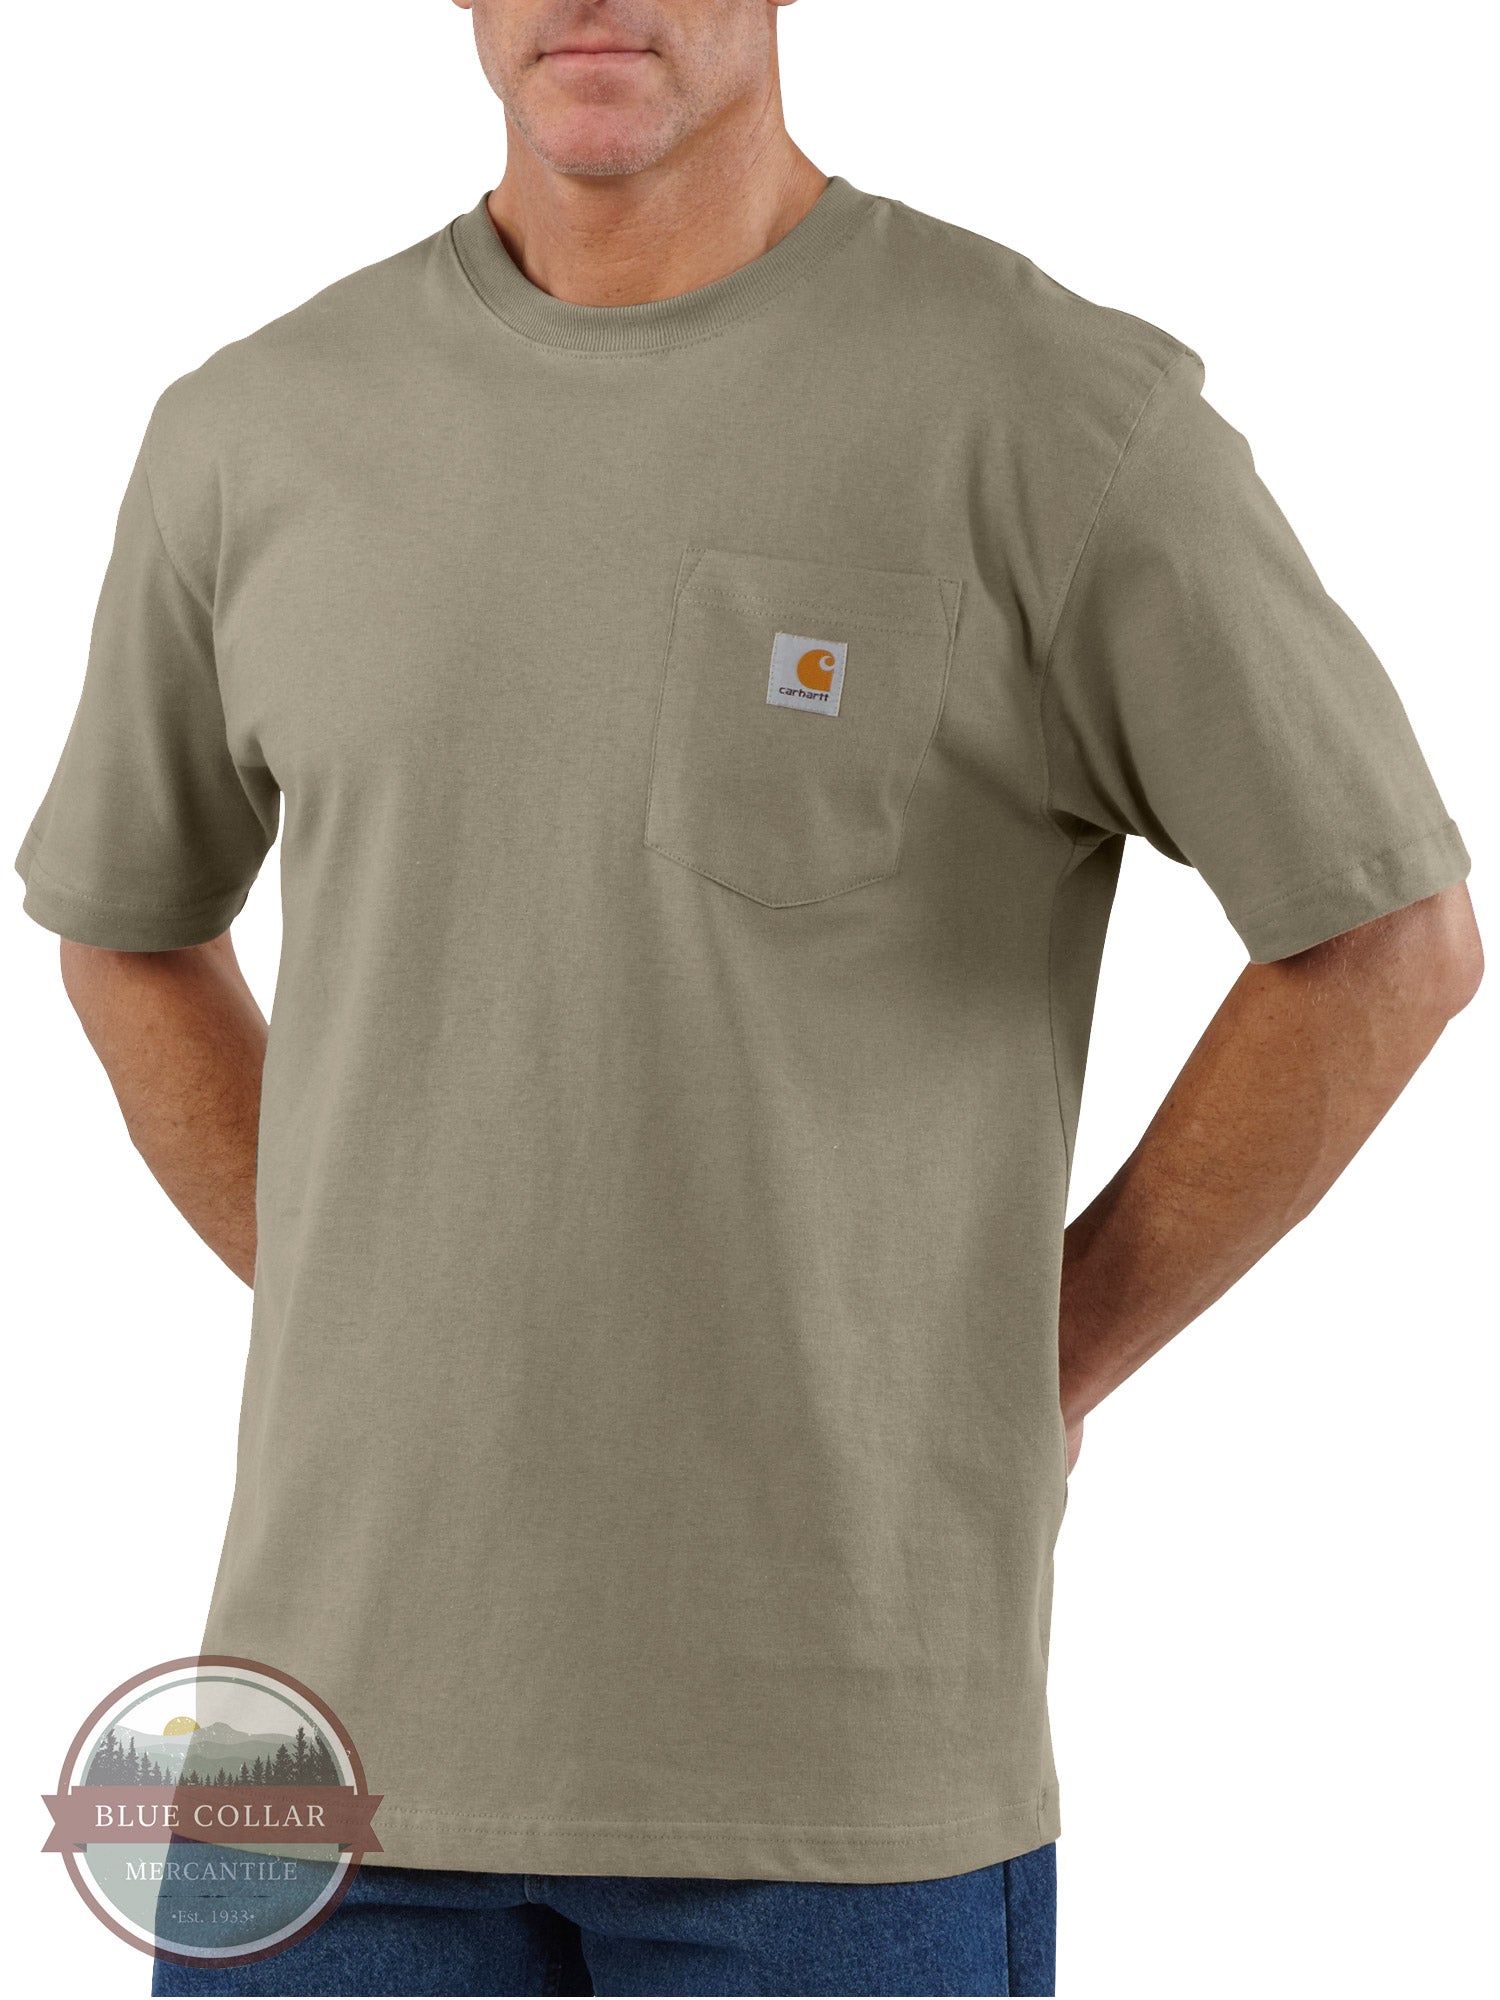 Carhartt K87 Loose Fit Heavyweight Short Sleeve Pocket T-Shirt Basic Colors desert sand